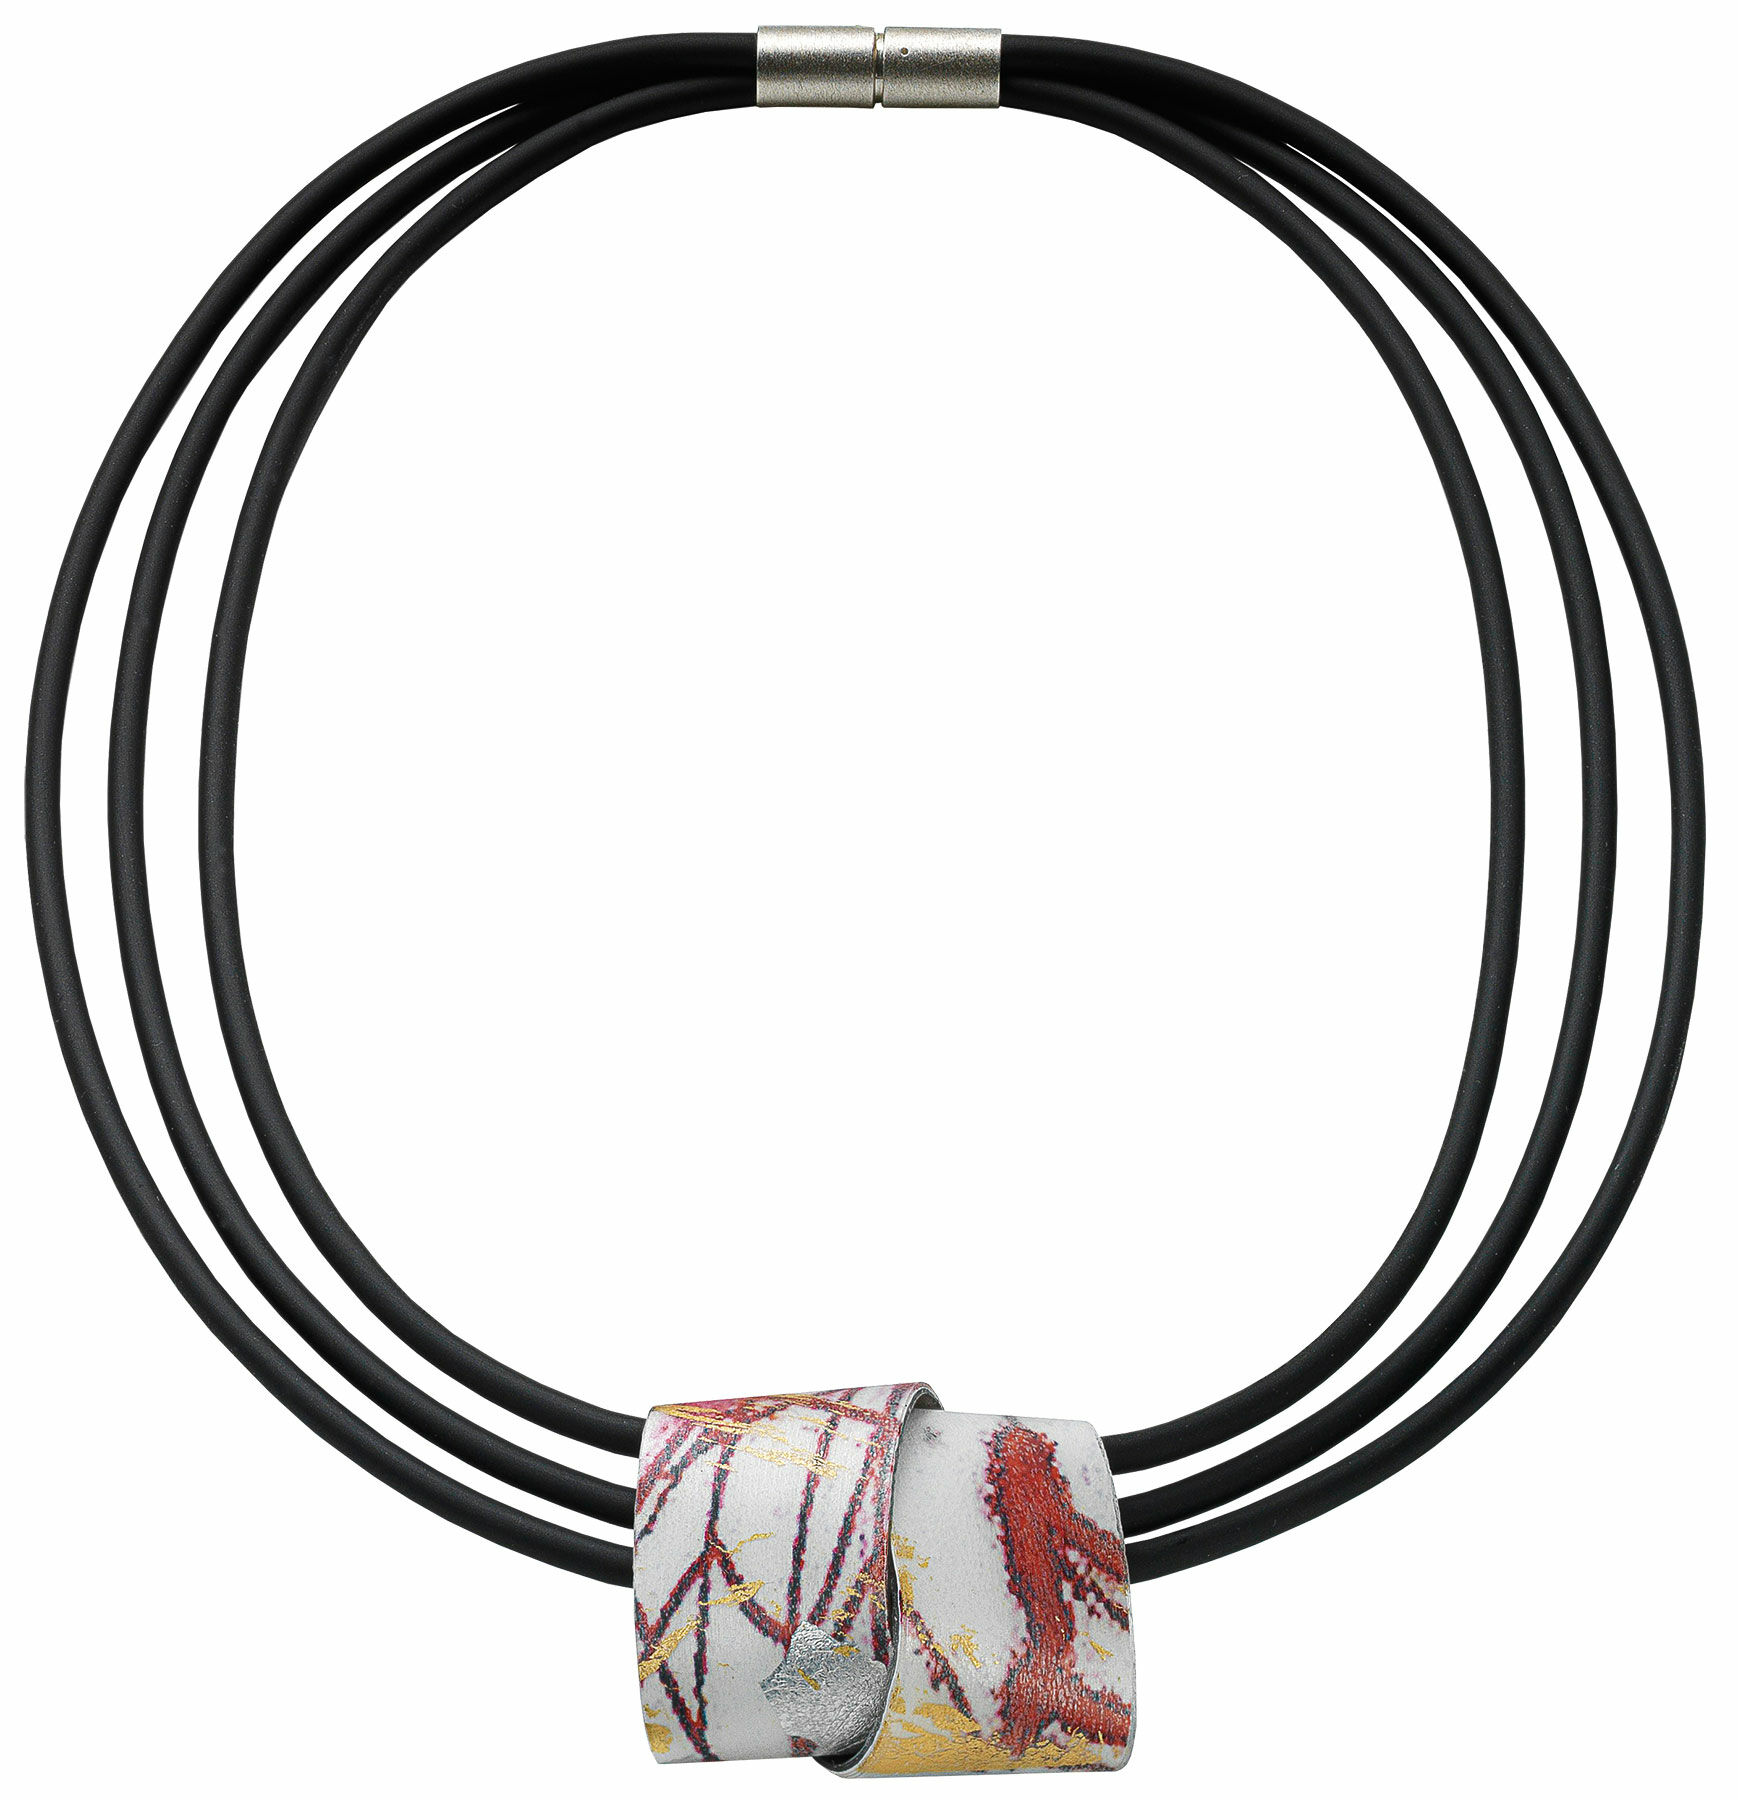 Necklace "Yokama" by Kreuchauff-Design